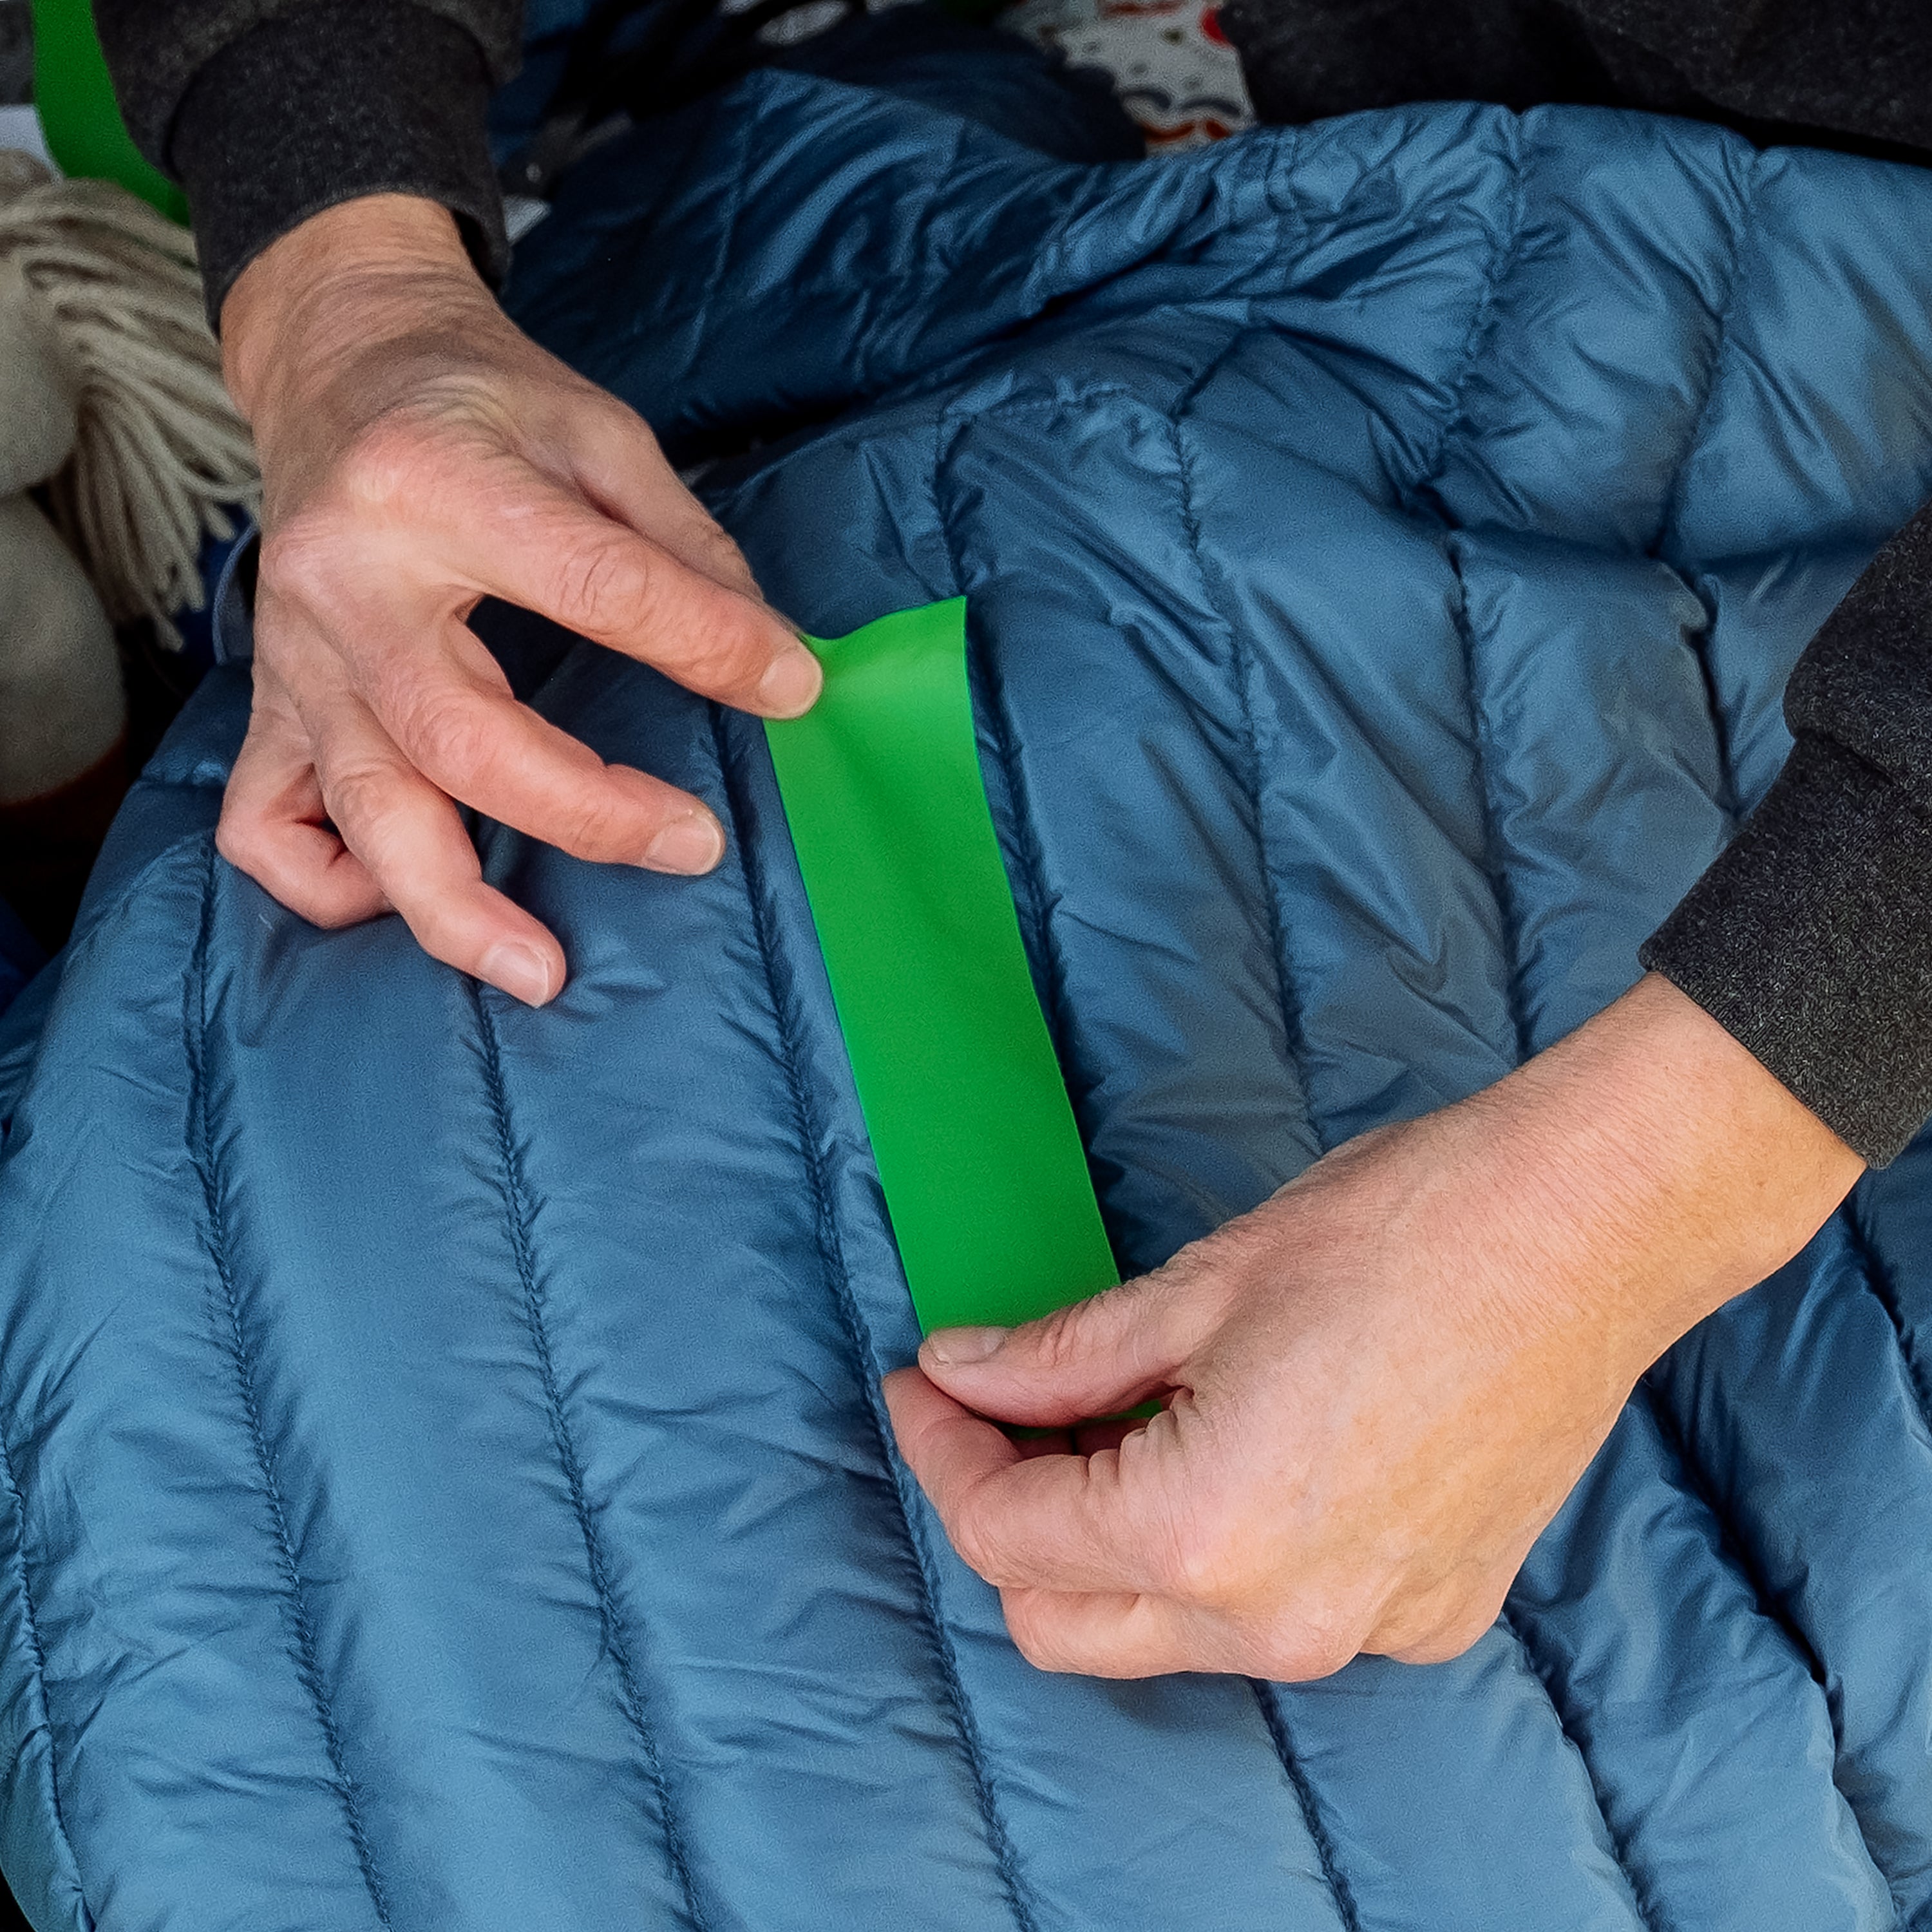 Beige Against Degradation Tent Repair Tape Outdoors - Buy Against